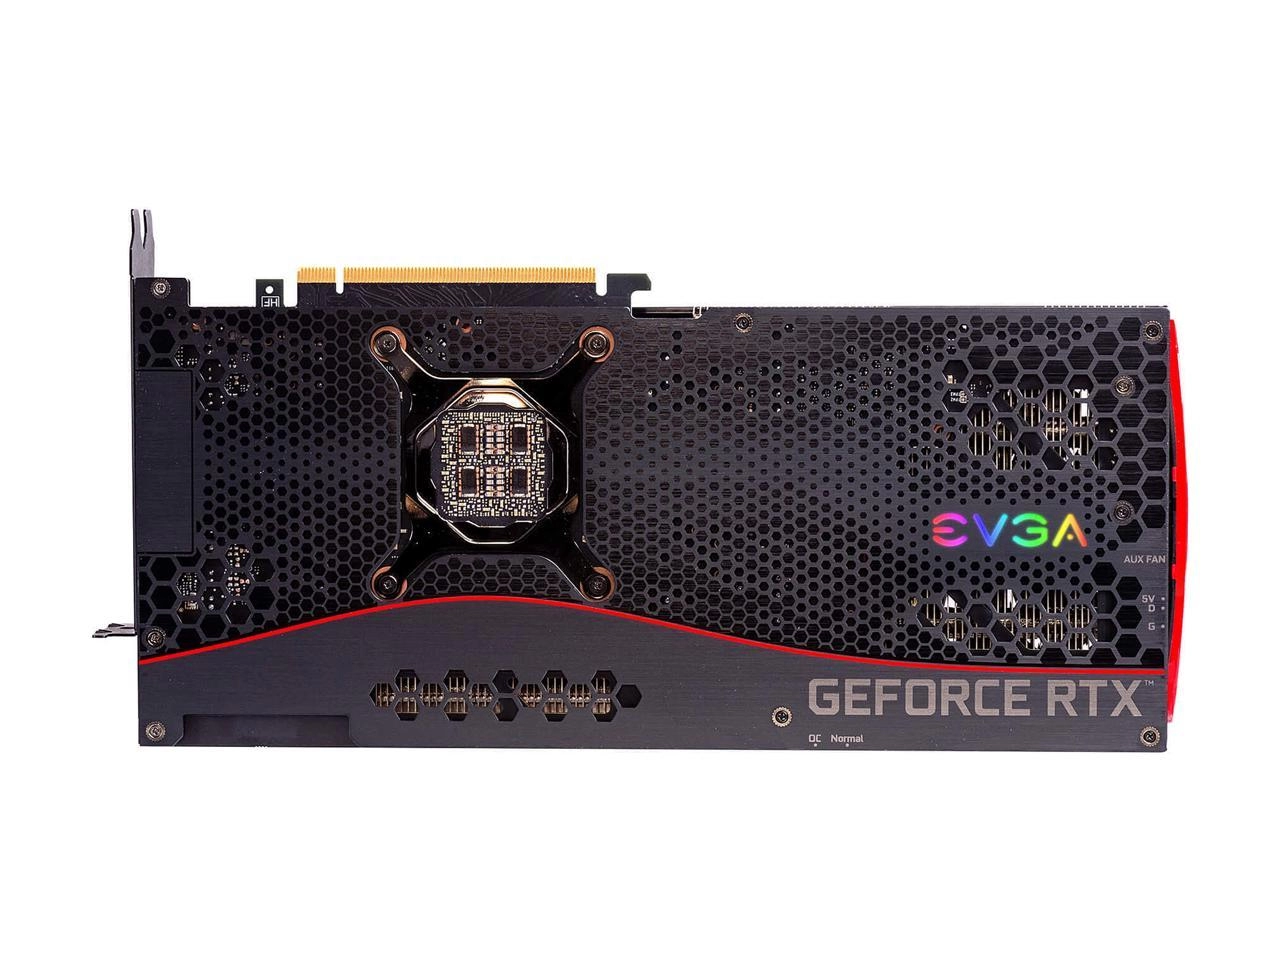 EVGA GeForce RTX 3080 FTW3 ULTRA GAMING 10GB Behind View